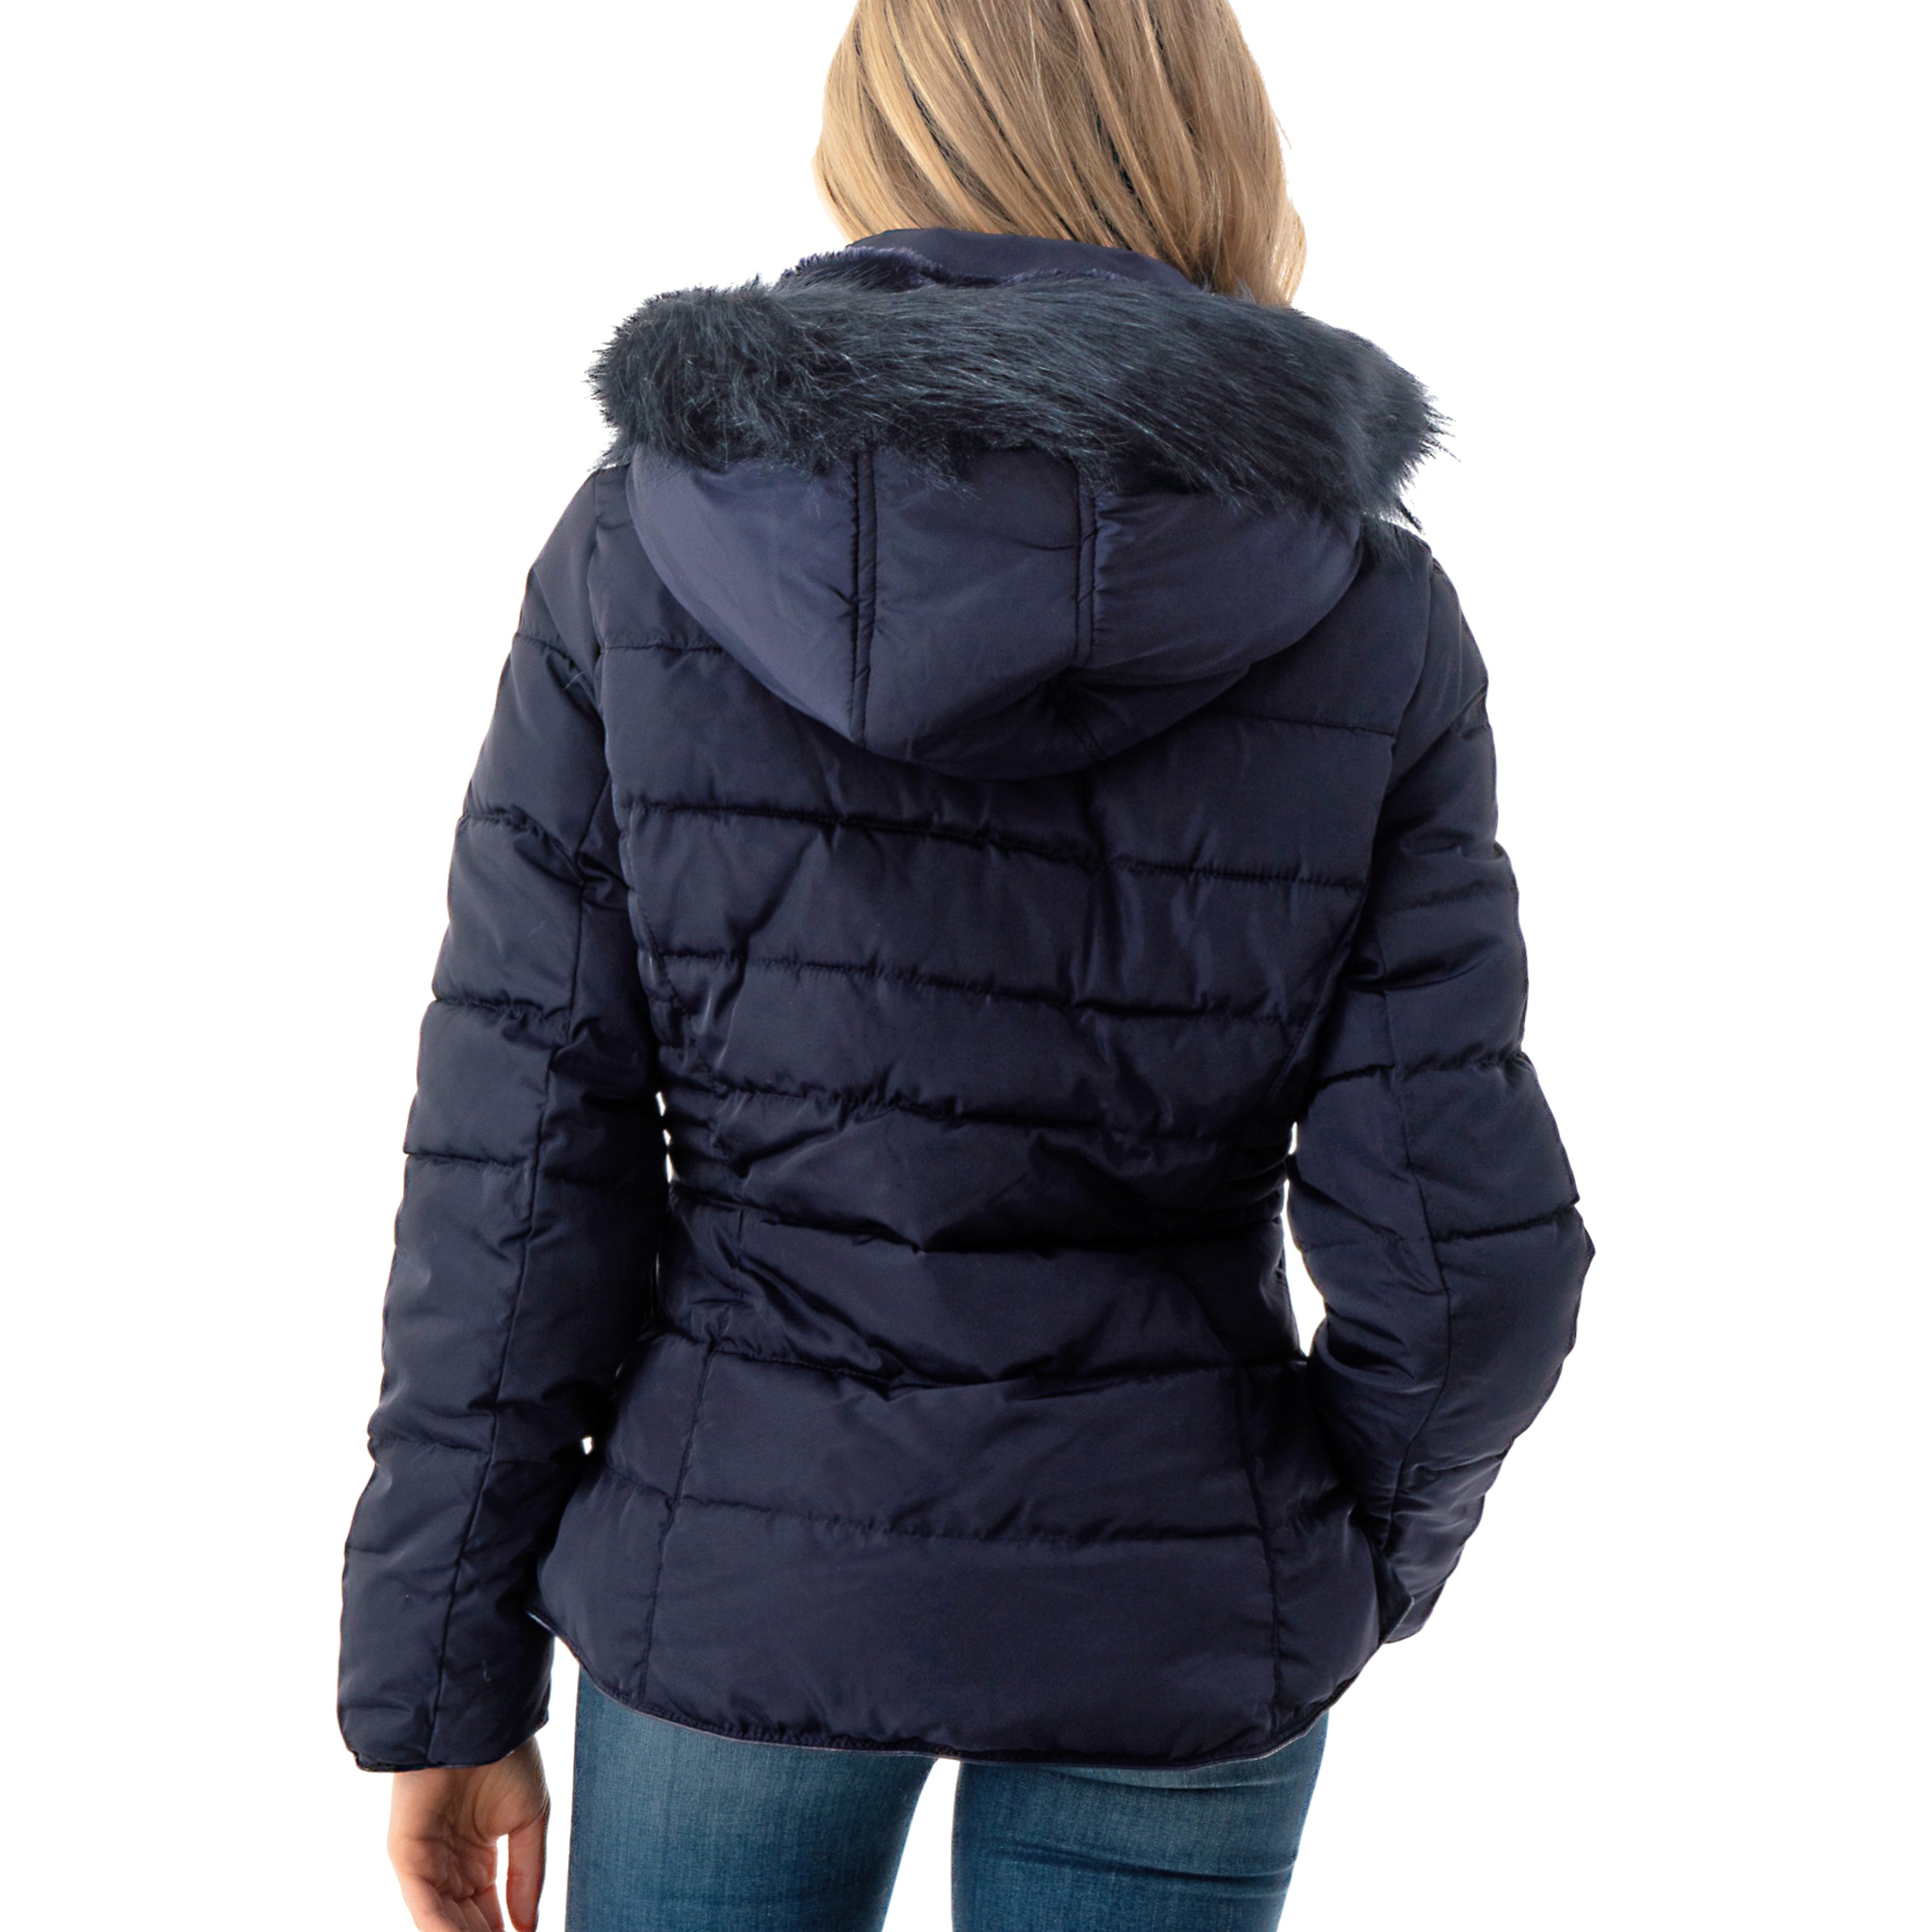 Fashionazzle Women's Short Puffer Coat with Removable Faux Fur Trim Hood Jacket